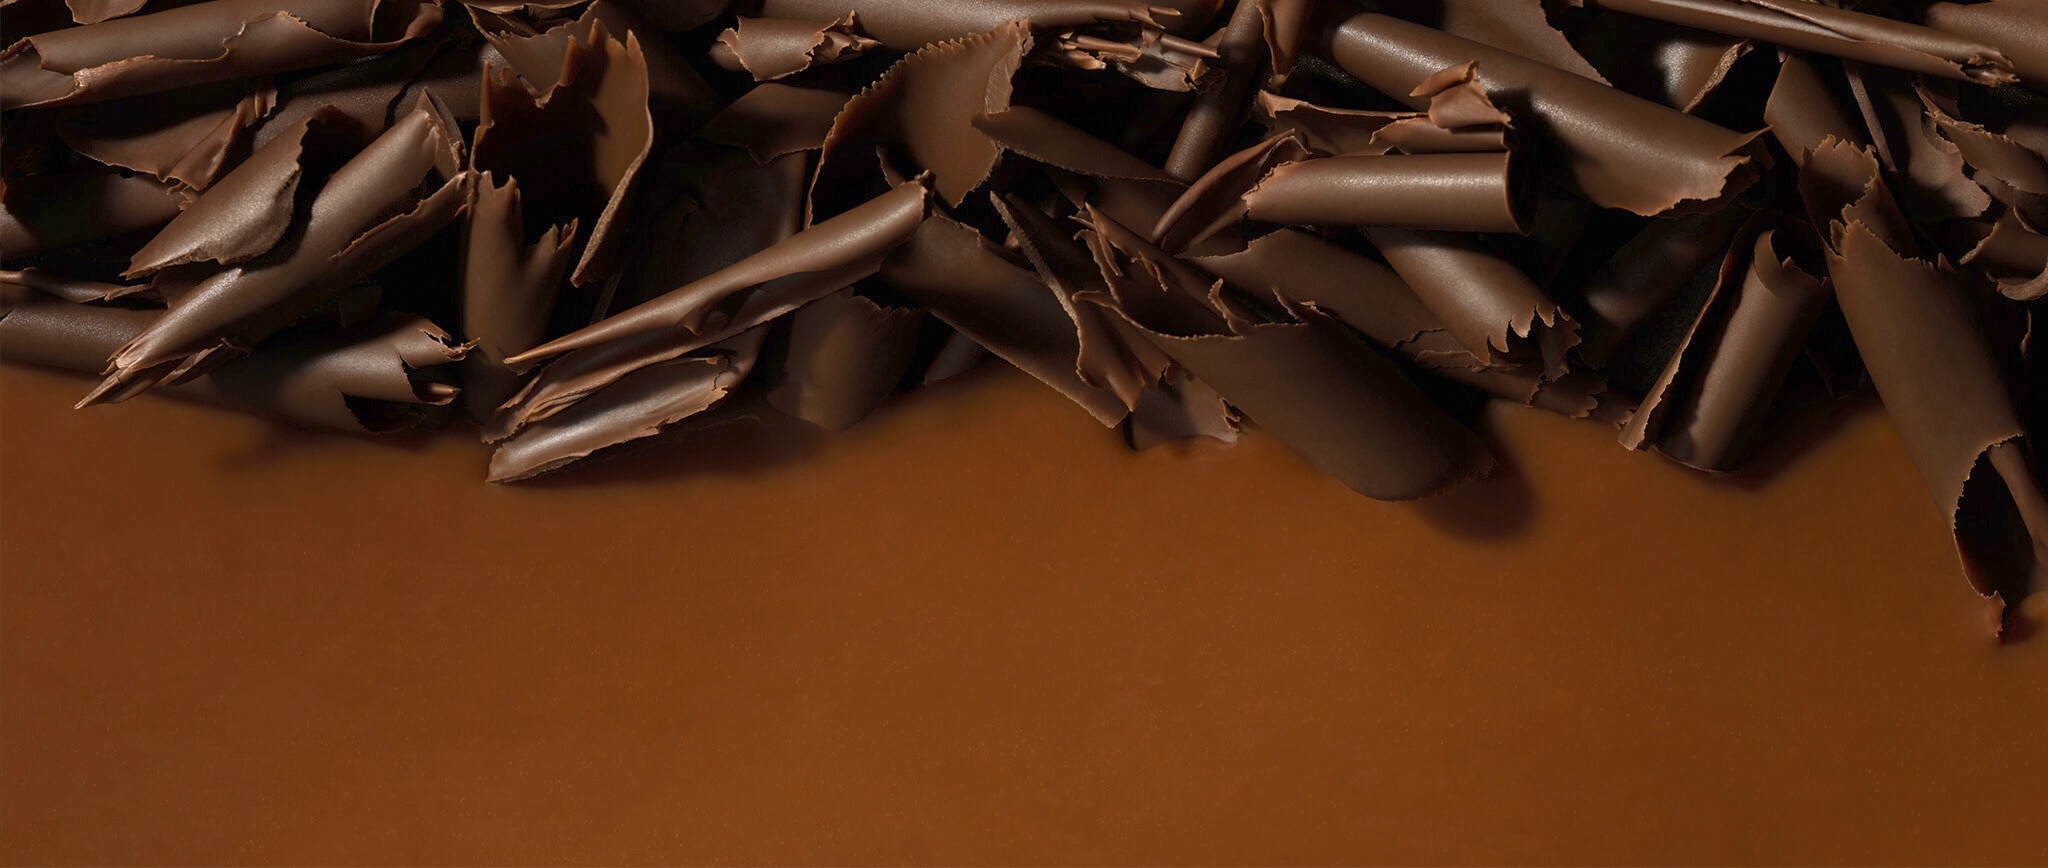 Shards of milk chocolate